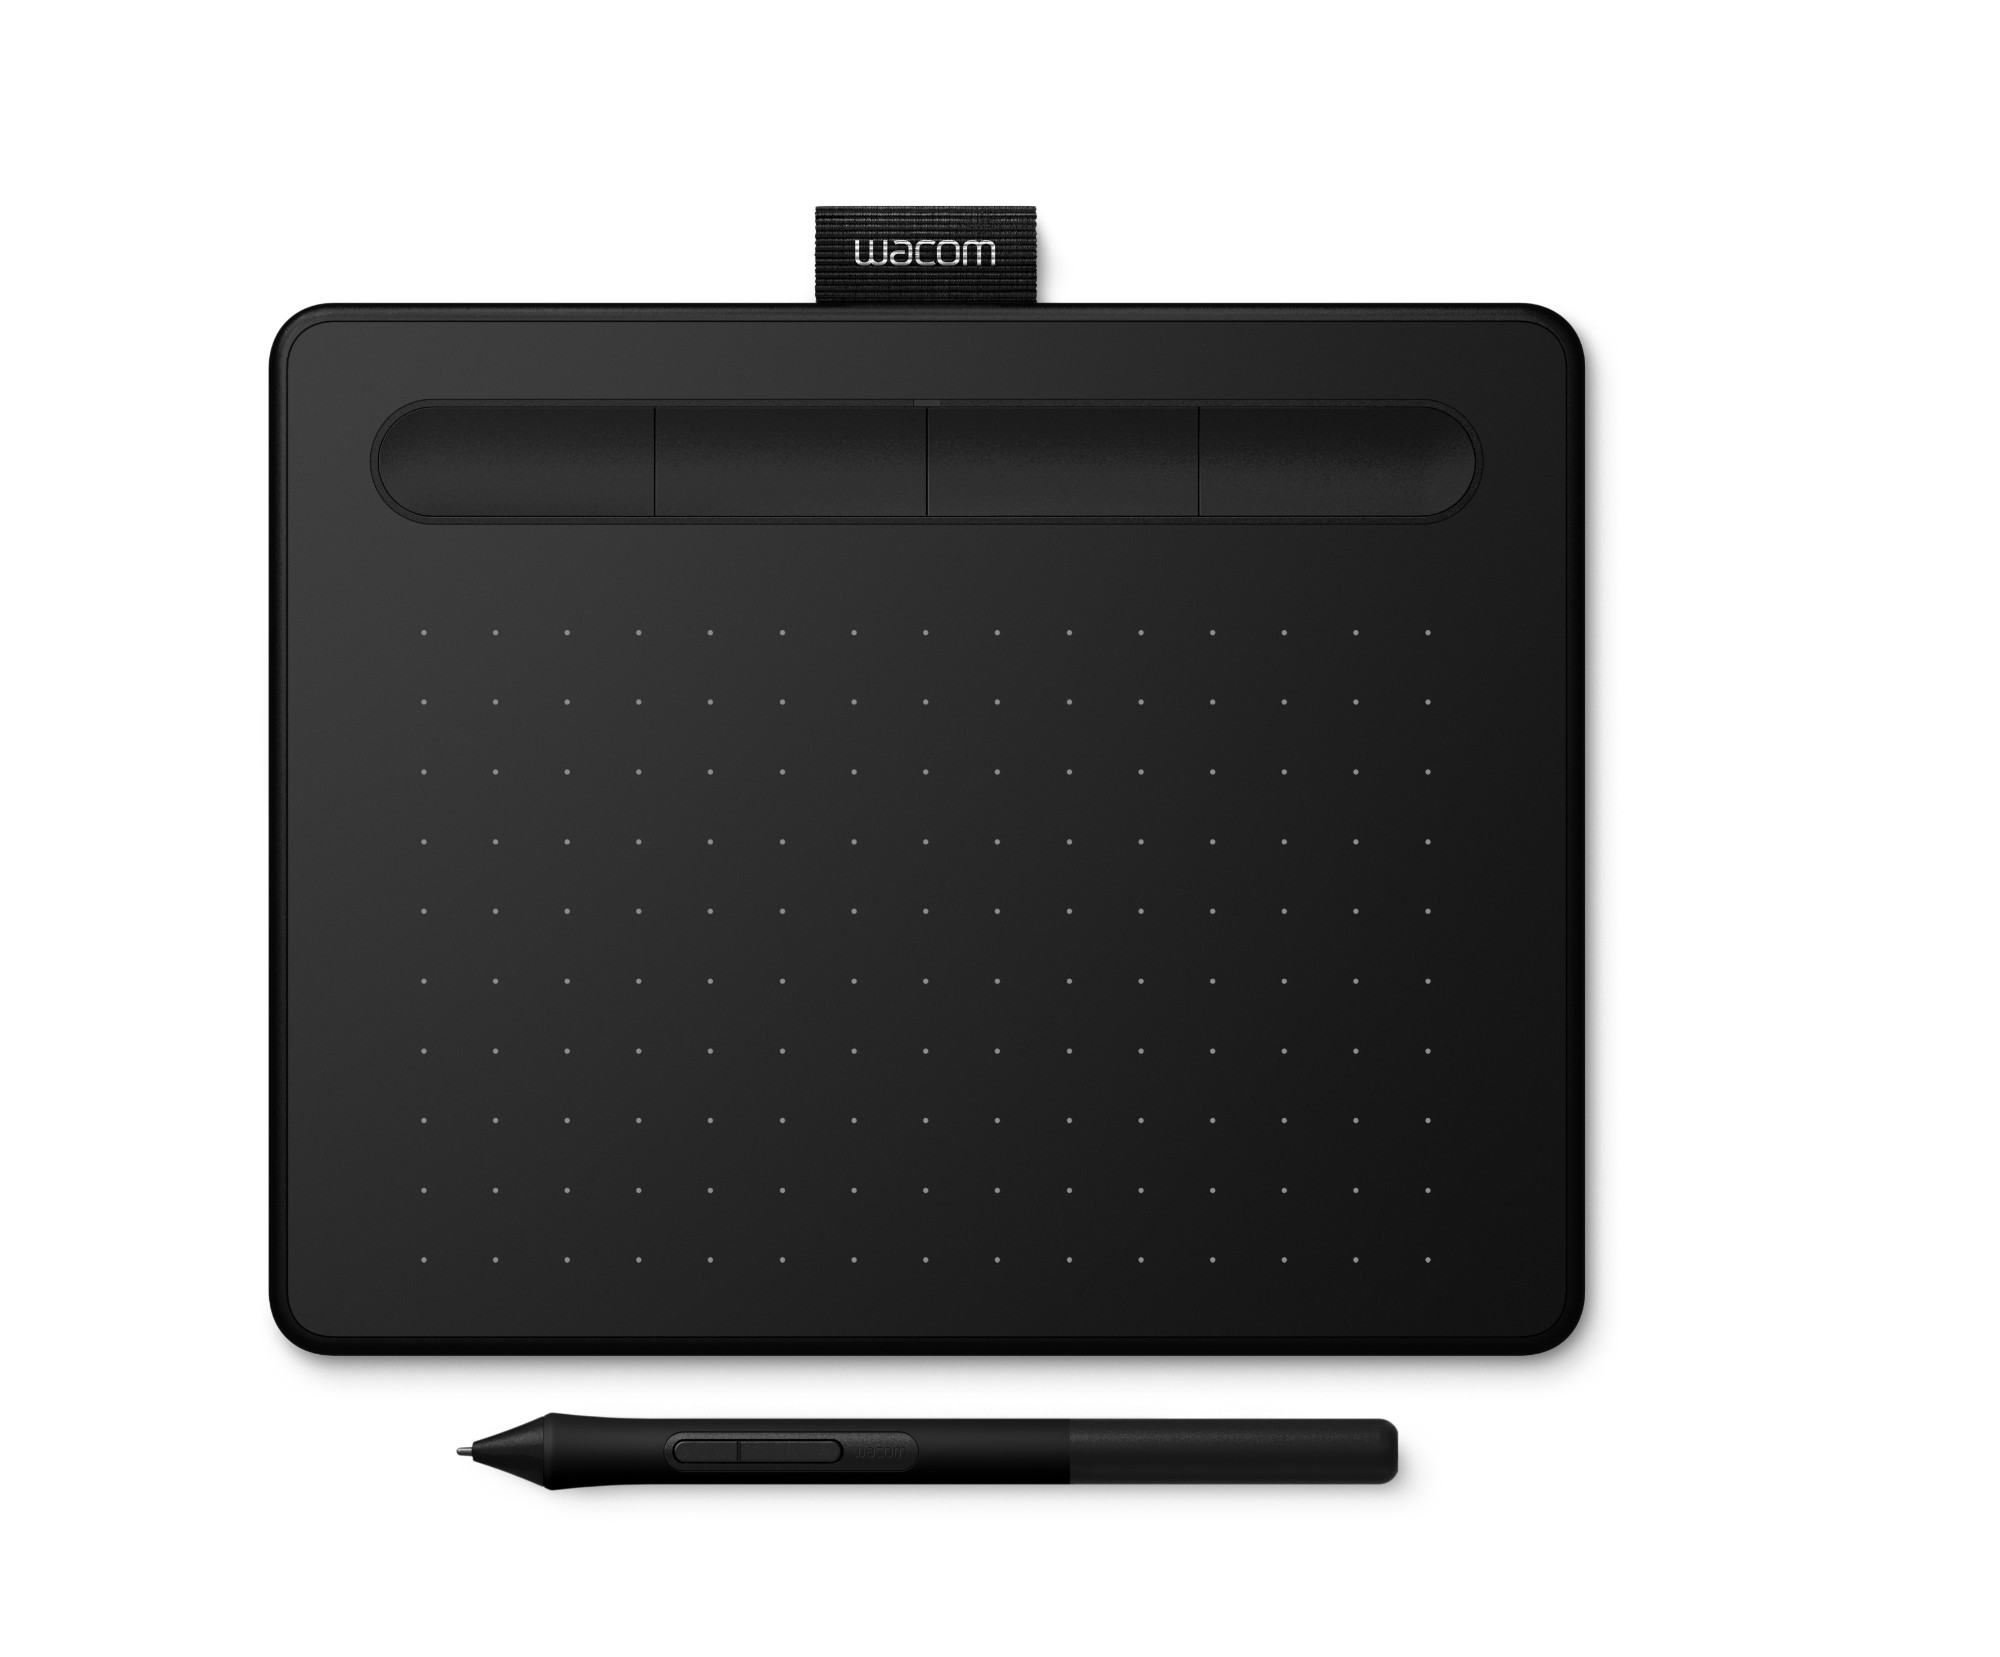 mens evne Intens Wacom Intuos CTL-4100 graphic tablet Black 2540 lpi 5.98 x 3.74" (152 x 95  mm) USB